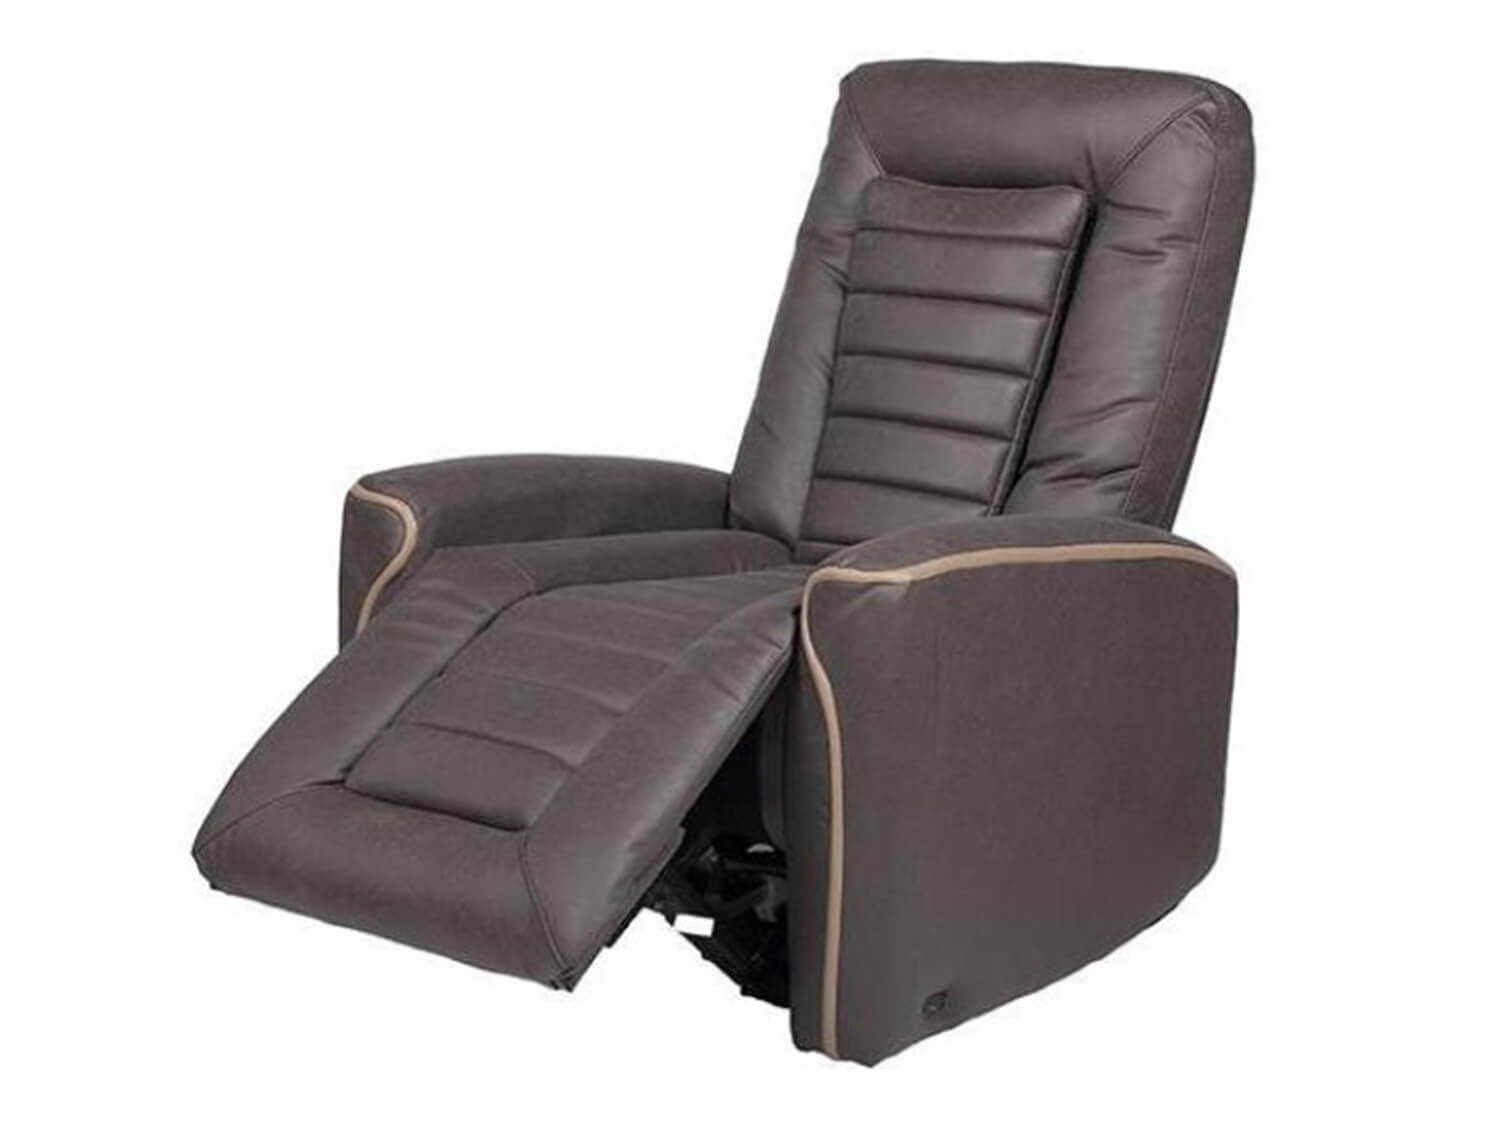 EGO Recline Chair 3001 Серый Для спины